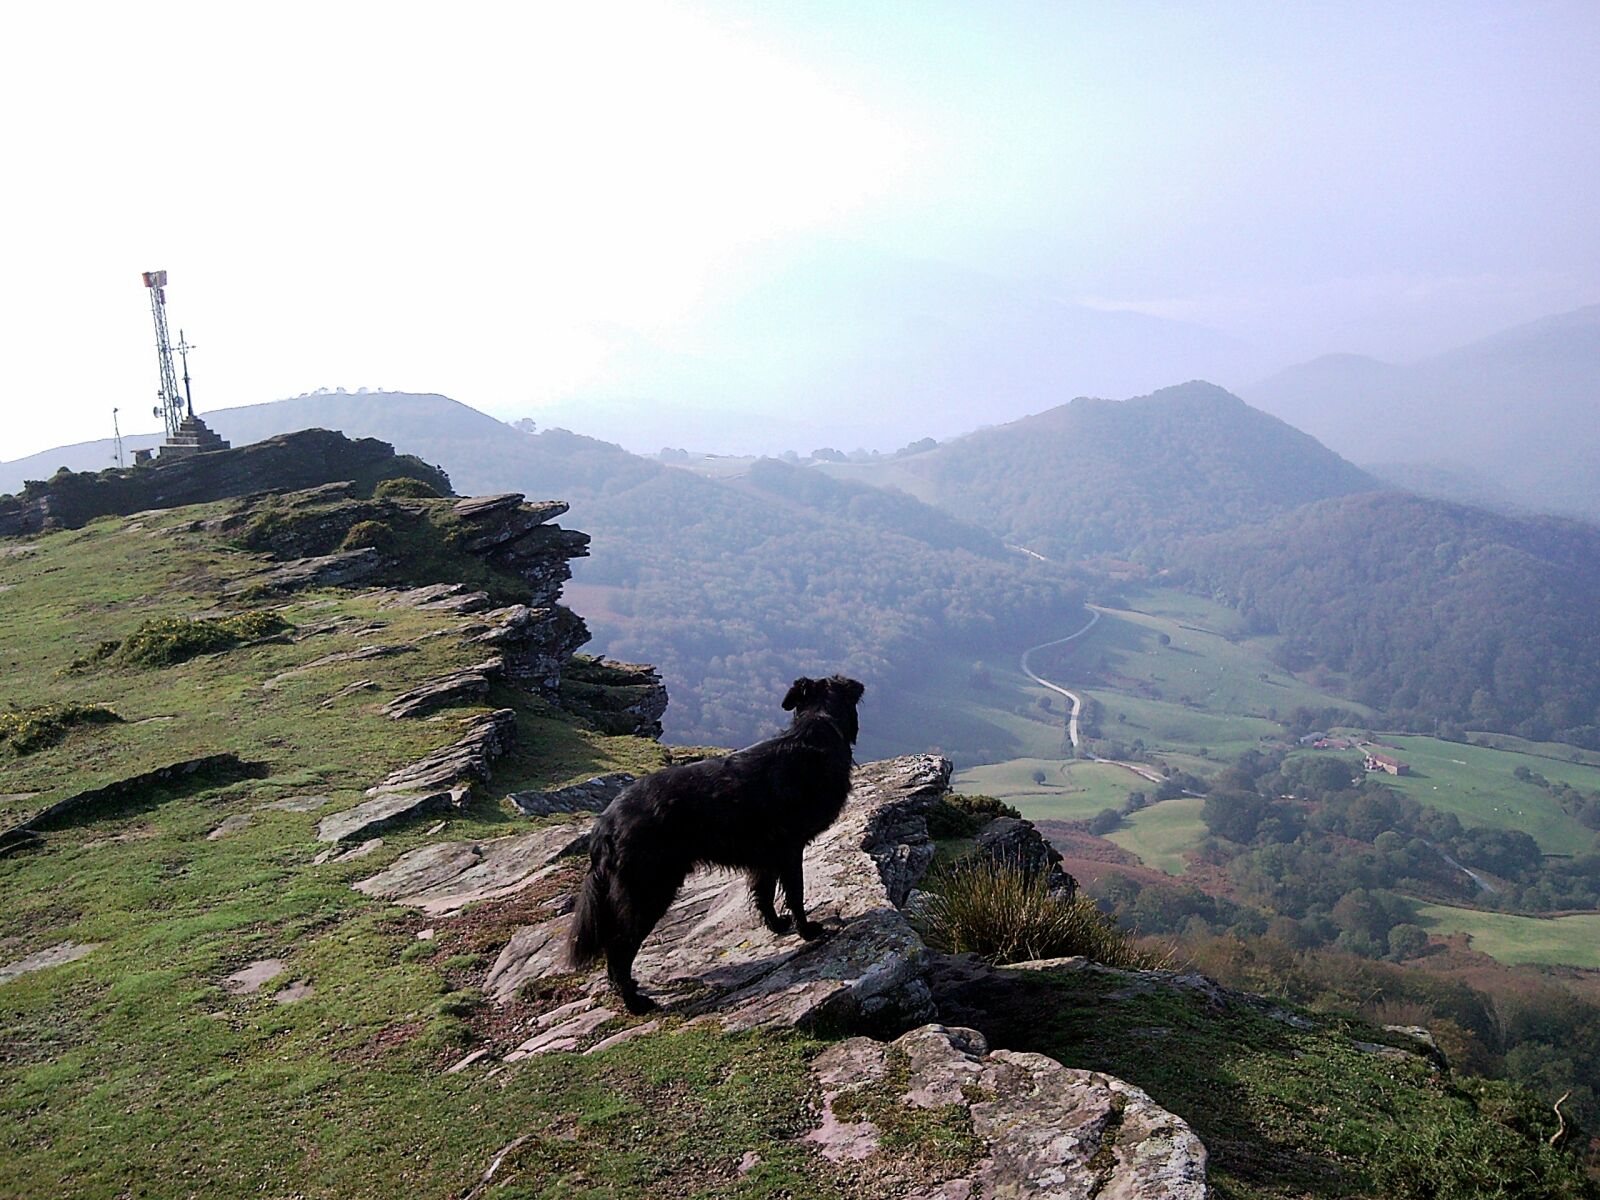 Samsung SGH-i900 sample photo. Mountain, dog, landscape photography